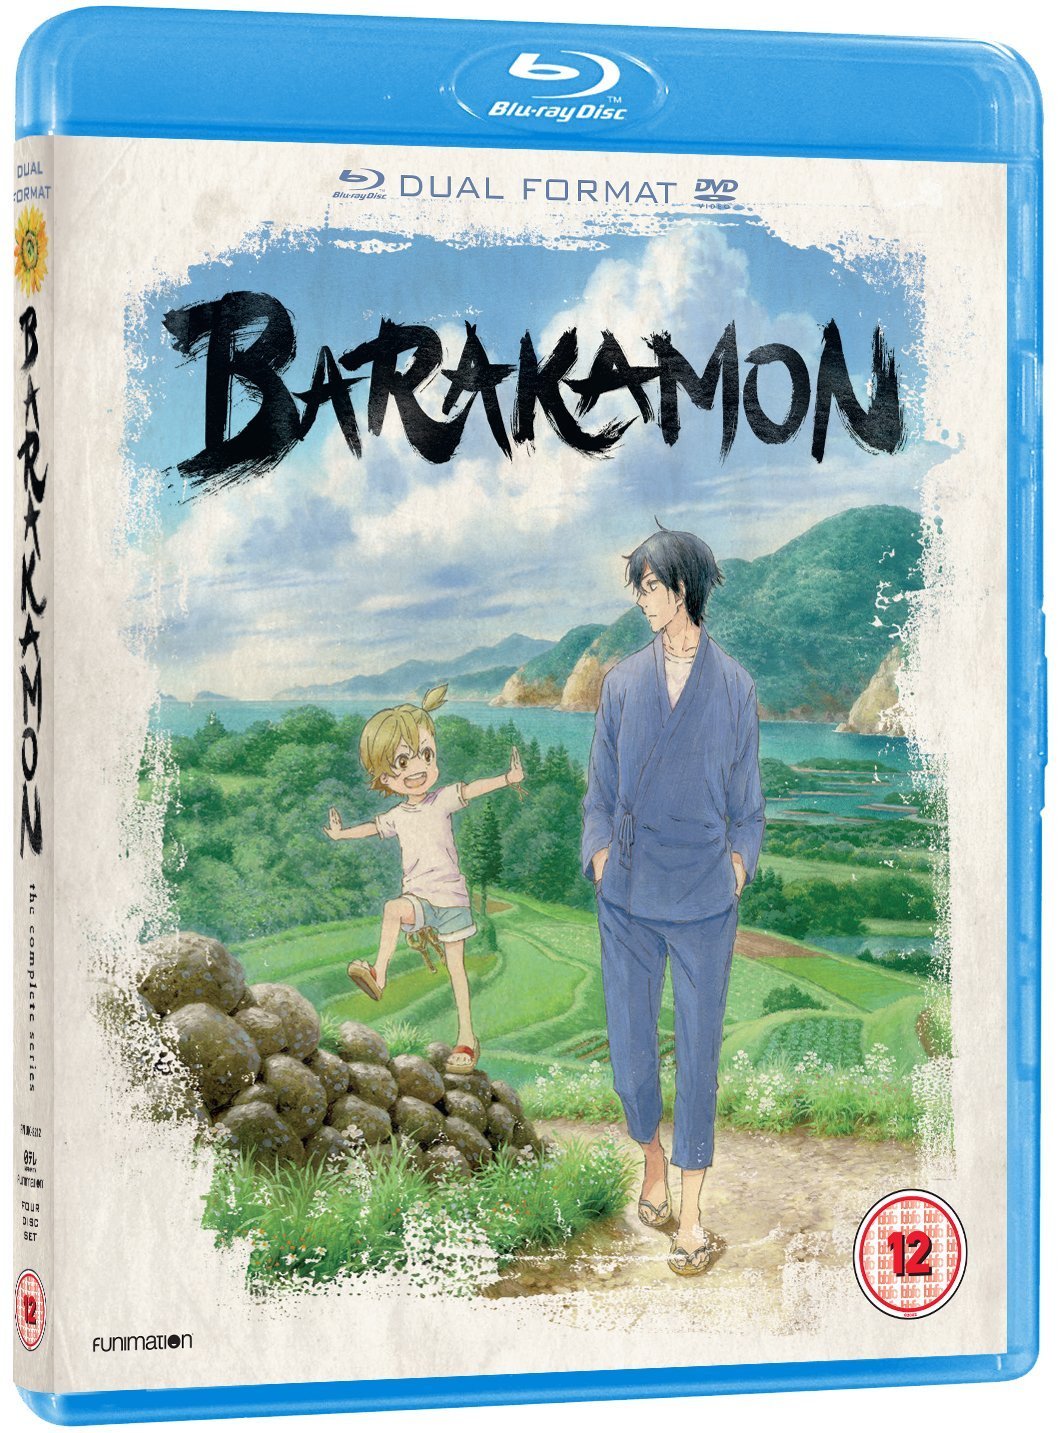 Barakamon Review